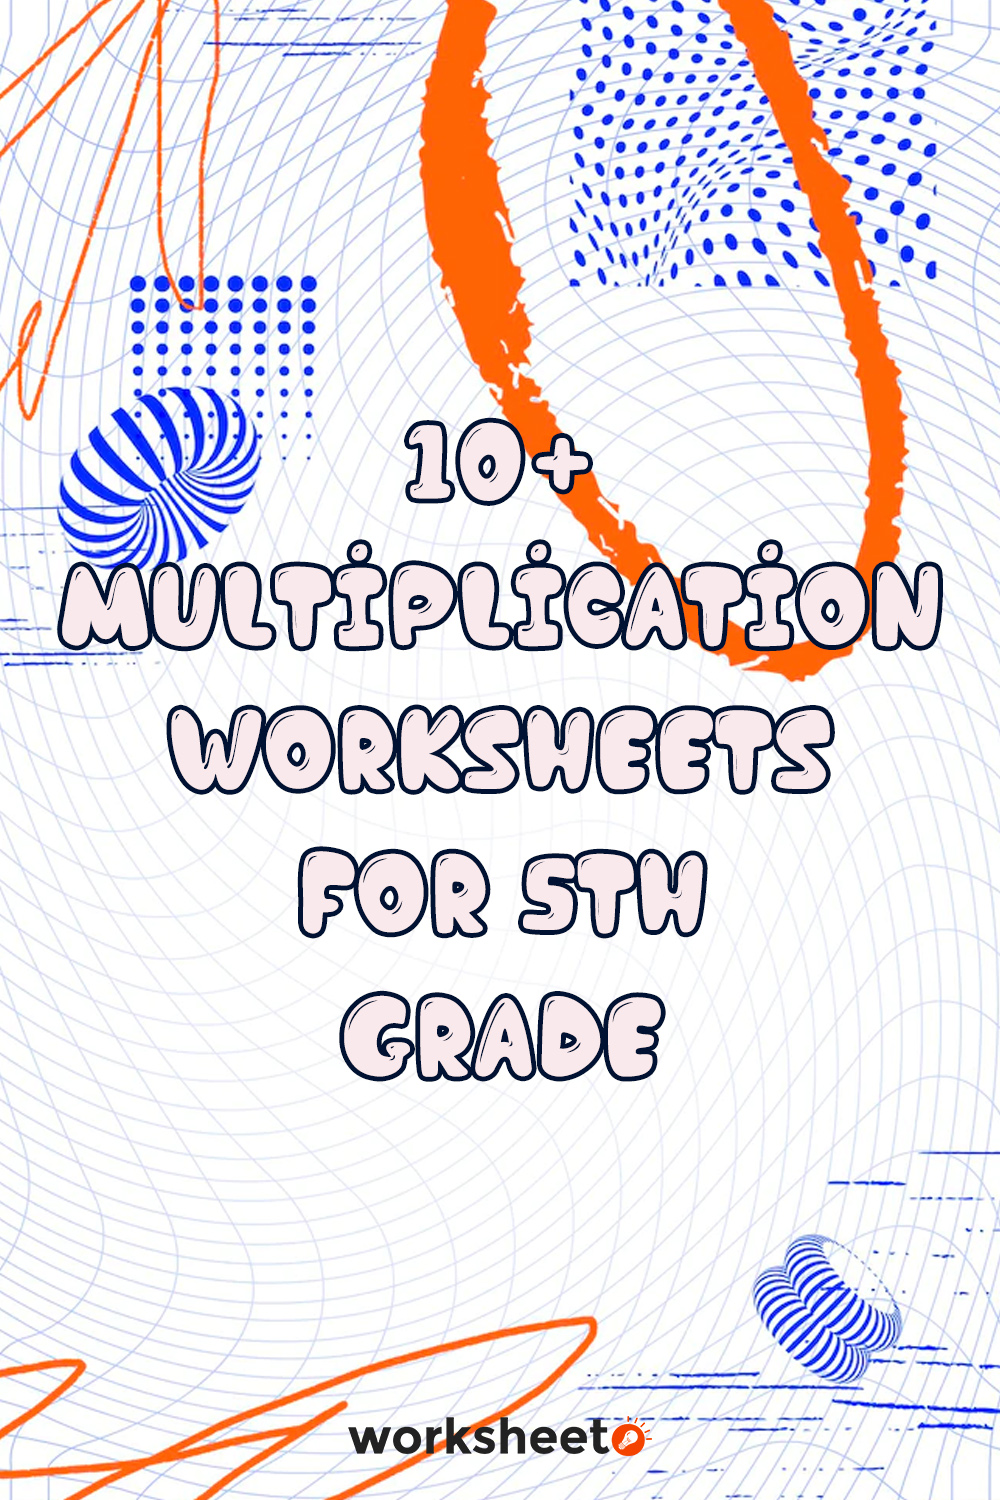 14 Multiplication Worksheets For 5th Grade Free PDF at worksheeto com